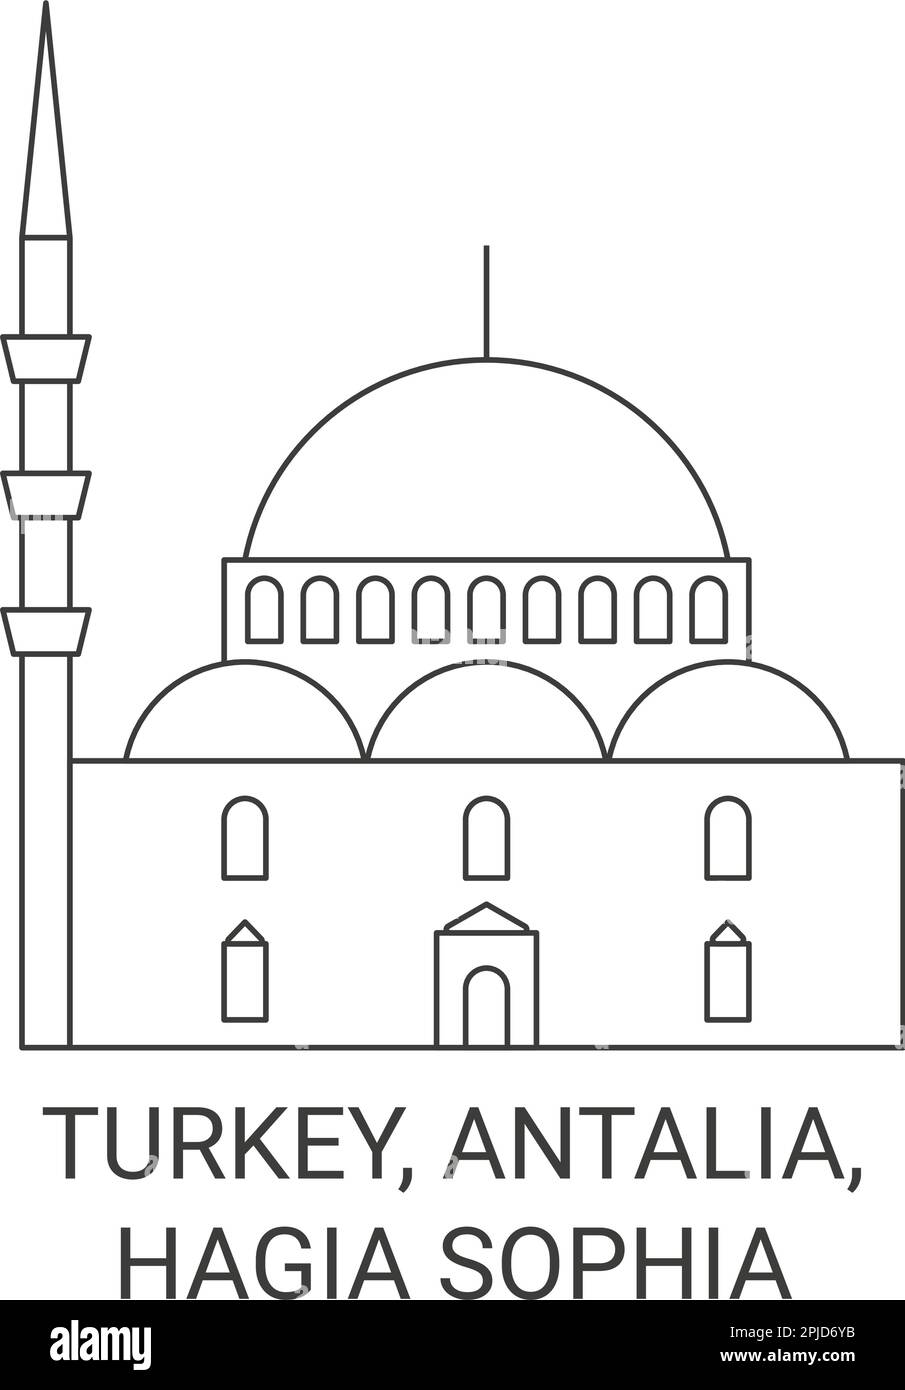 Turkey, Antalia, Hagia Sophia travel landmark vector illustration Stock Vector